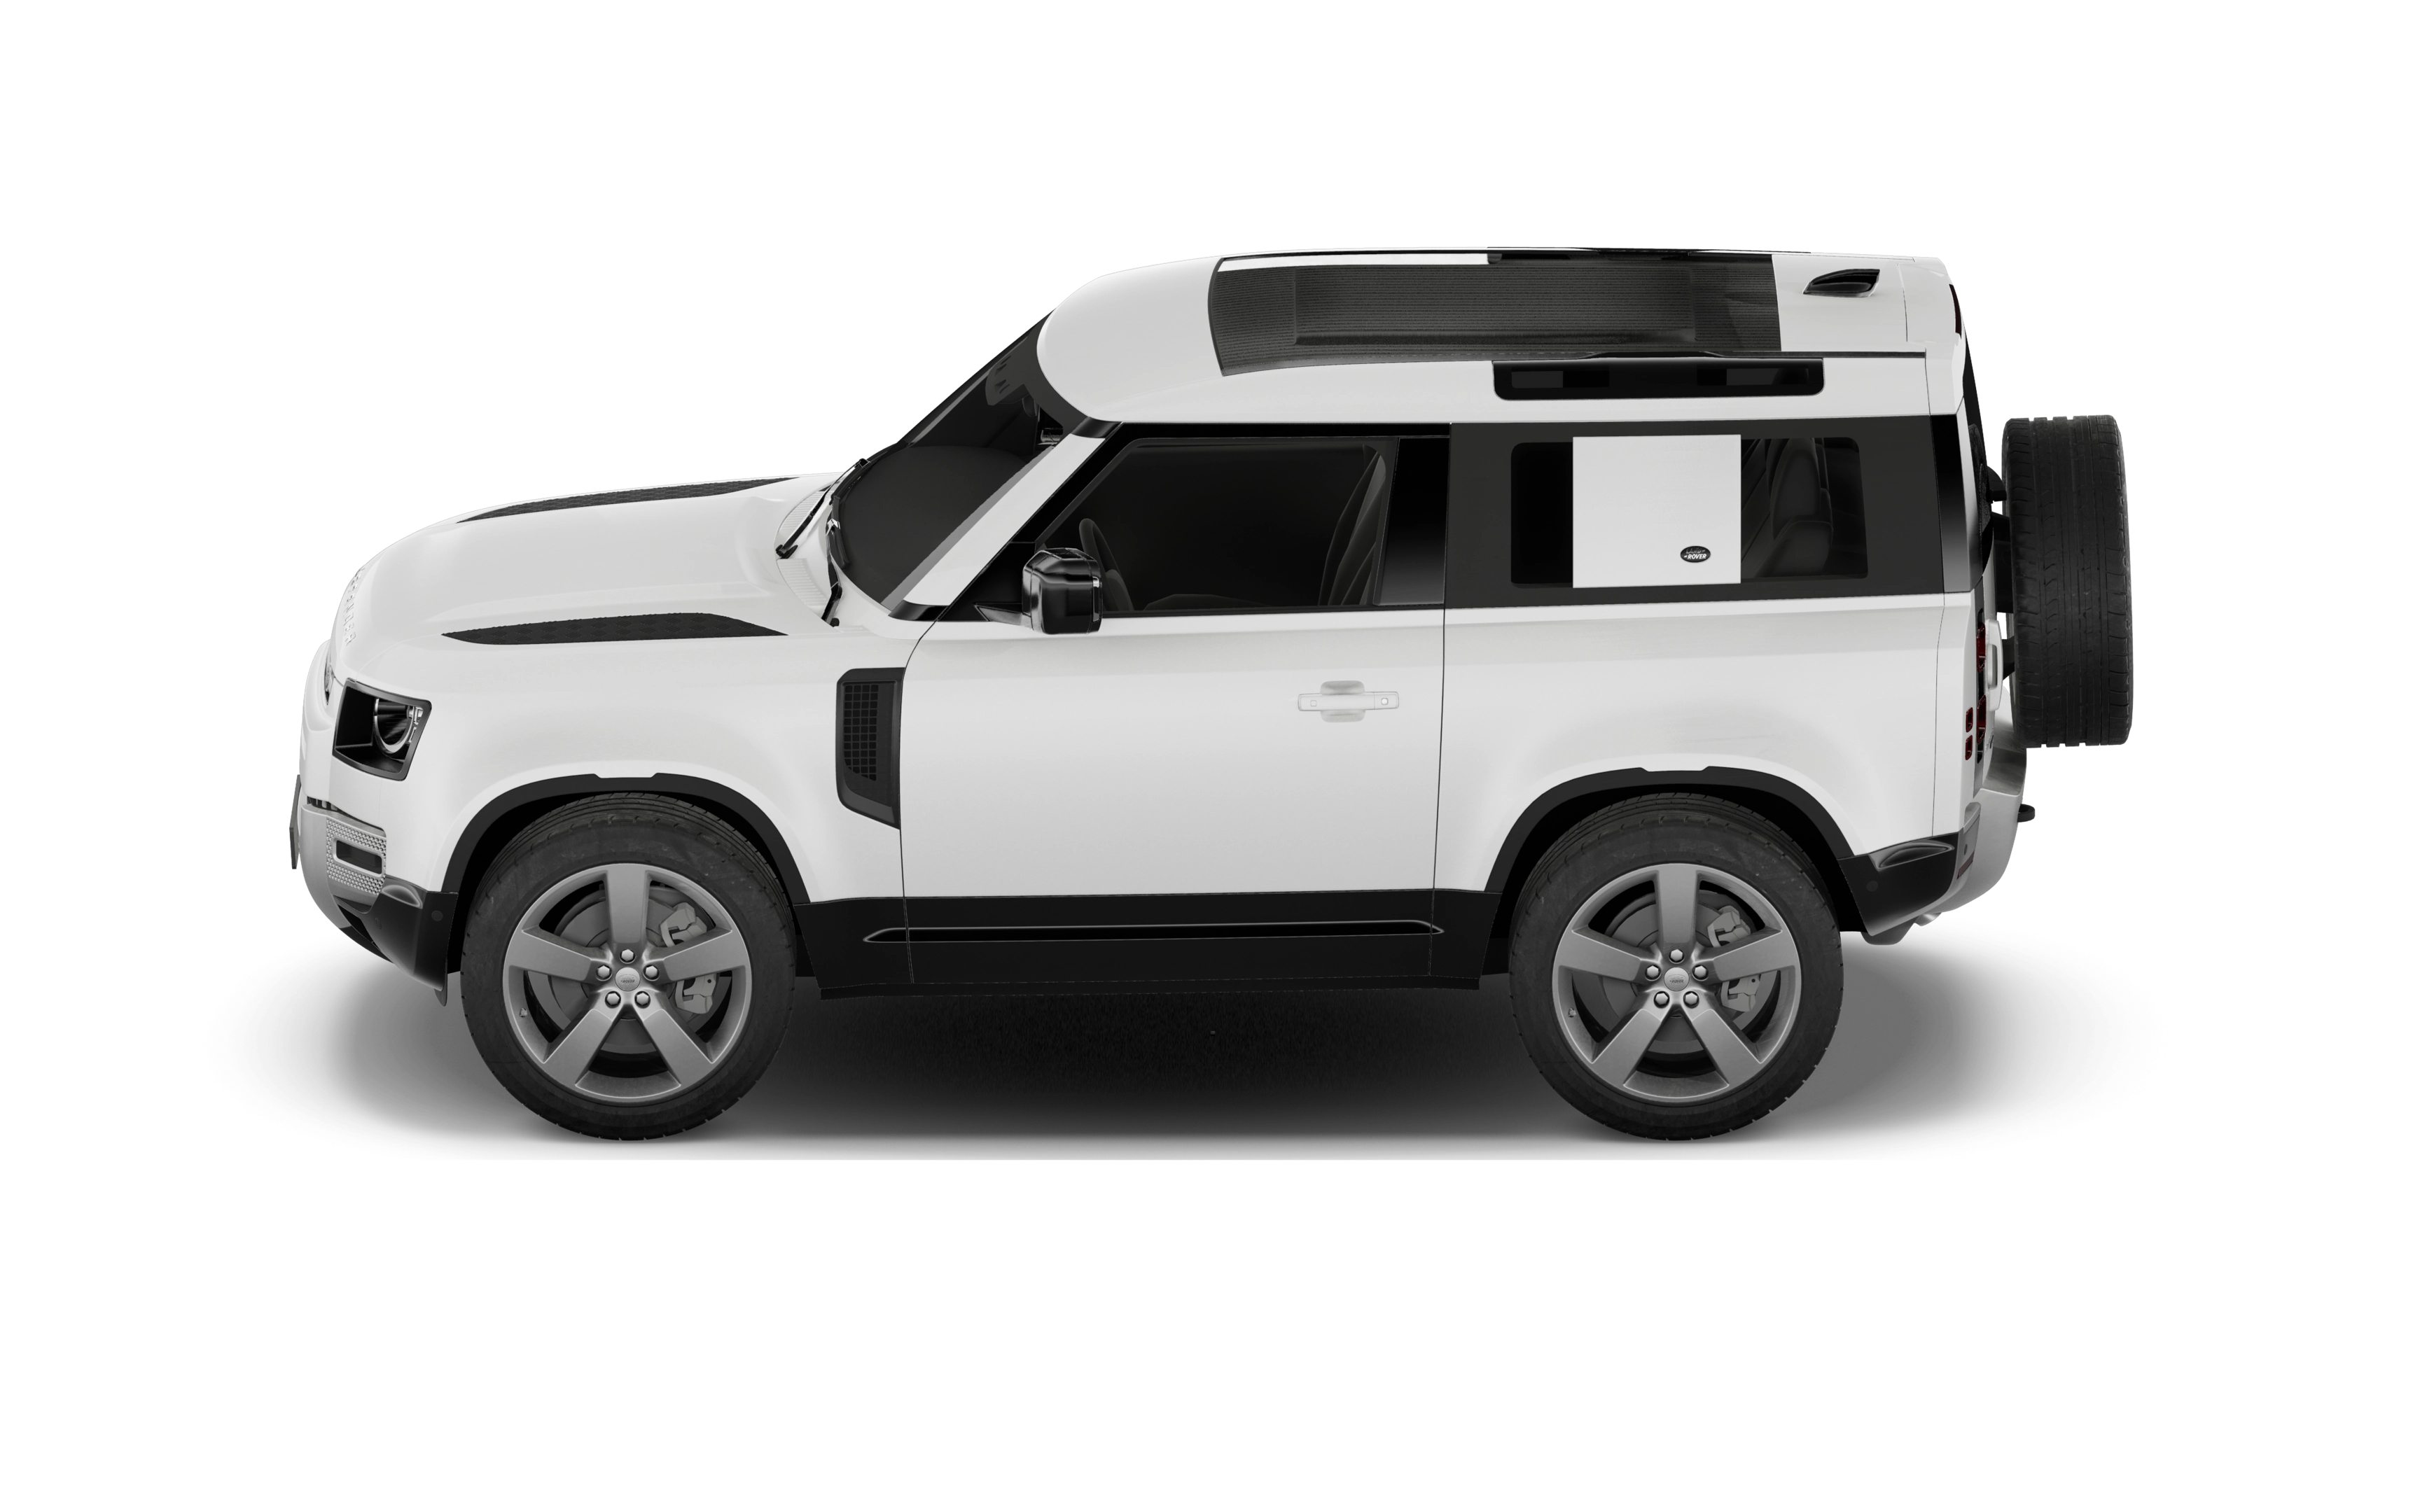 Land rover defender estate 3.0 d300 x-dynamic hse 110 5 doors auto [7 seat]